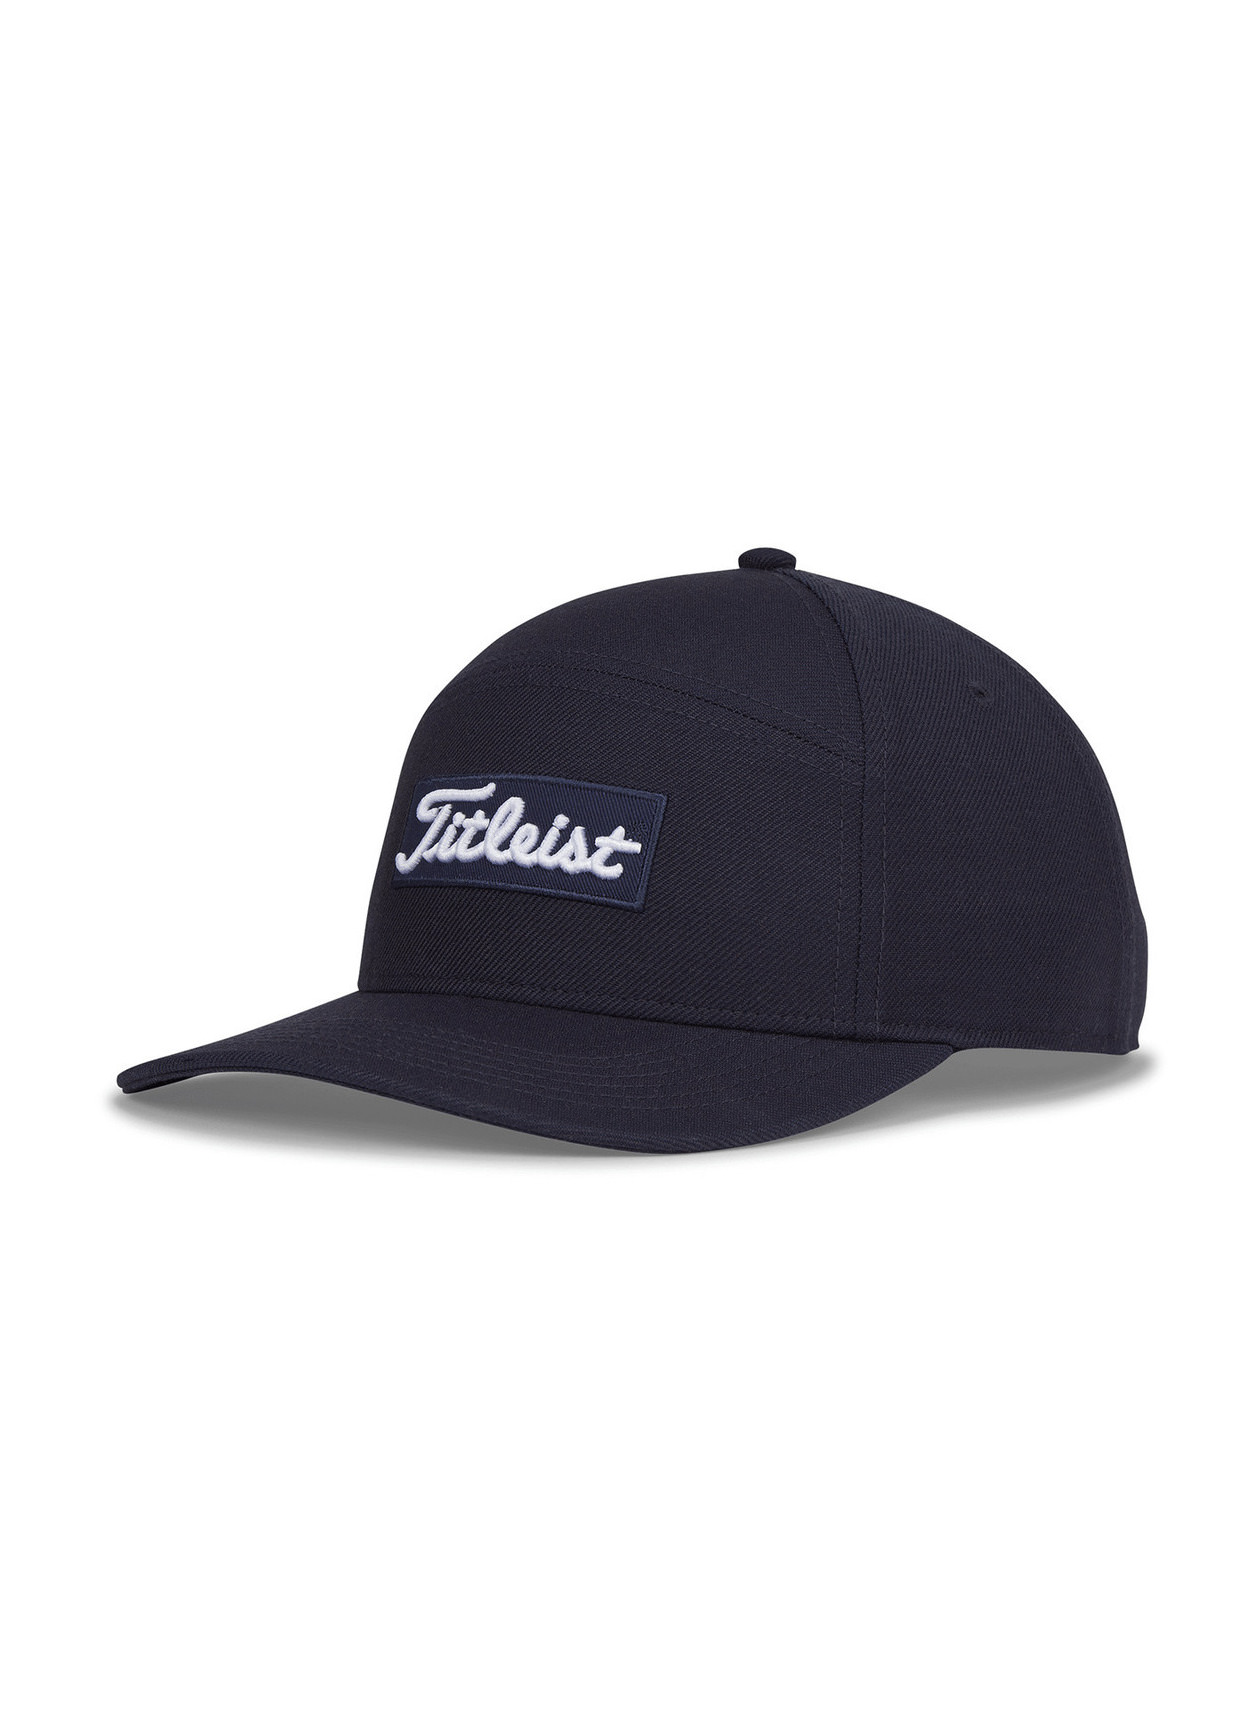 Titleist Navy / White Oceanside Wool Hat